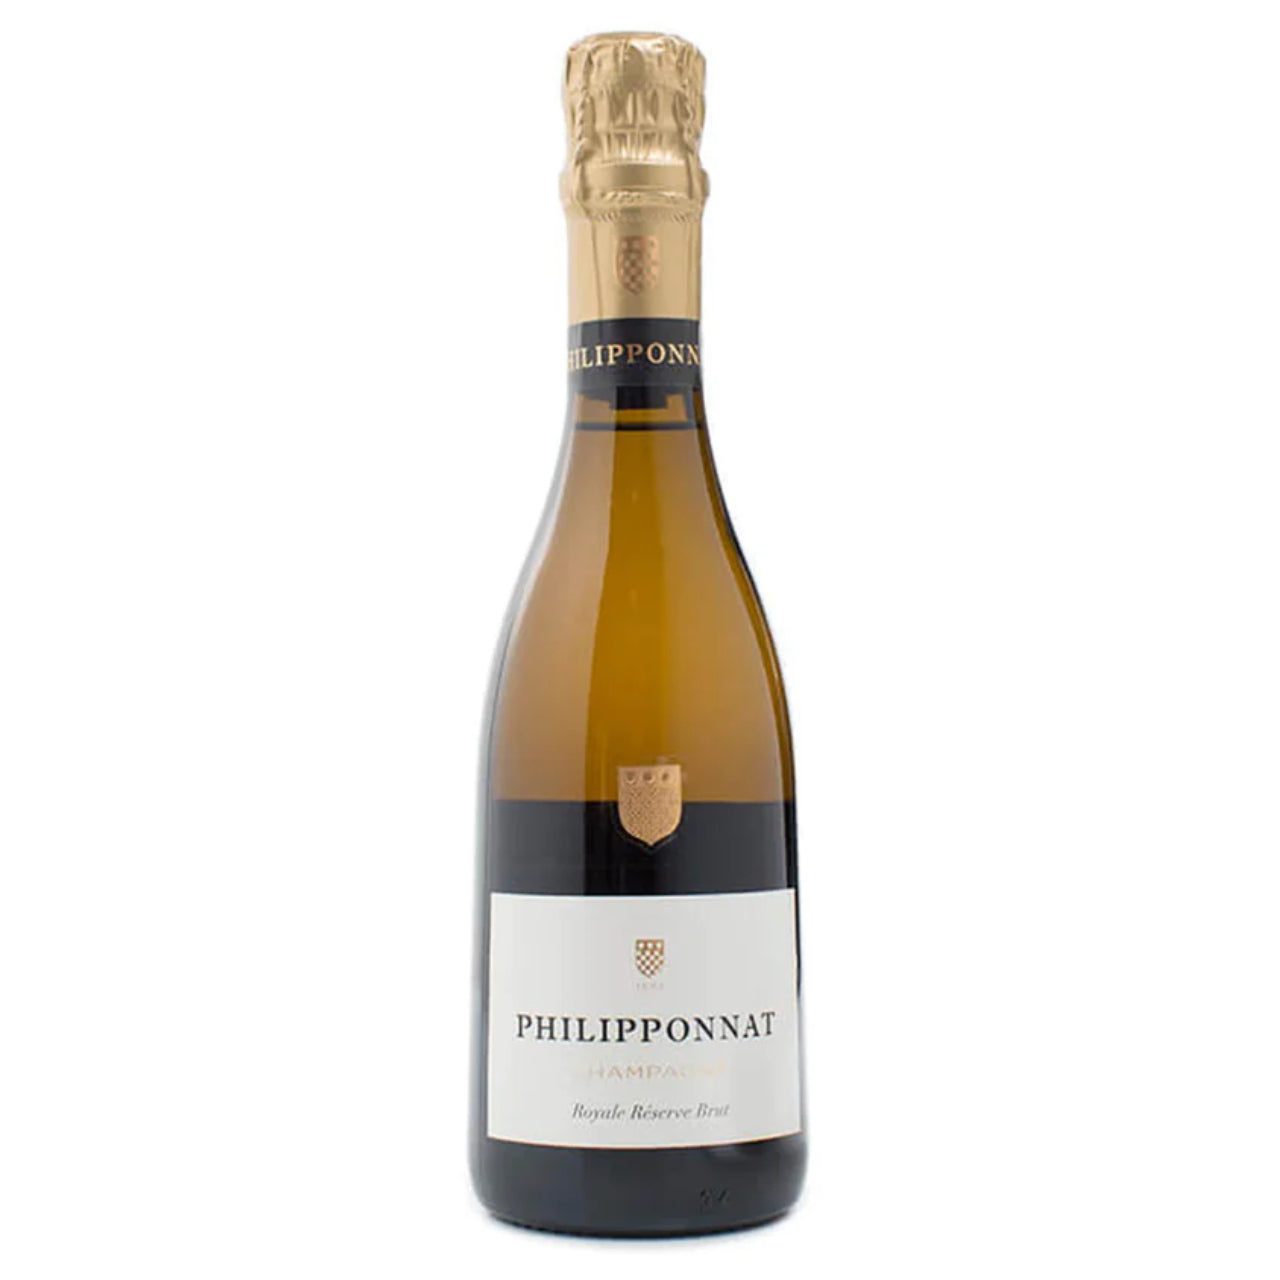 PHILIPPONNAT RoylRes Brut 375ml - Wine France Champagne - Liquor Wine Cave